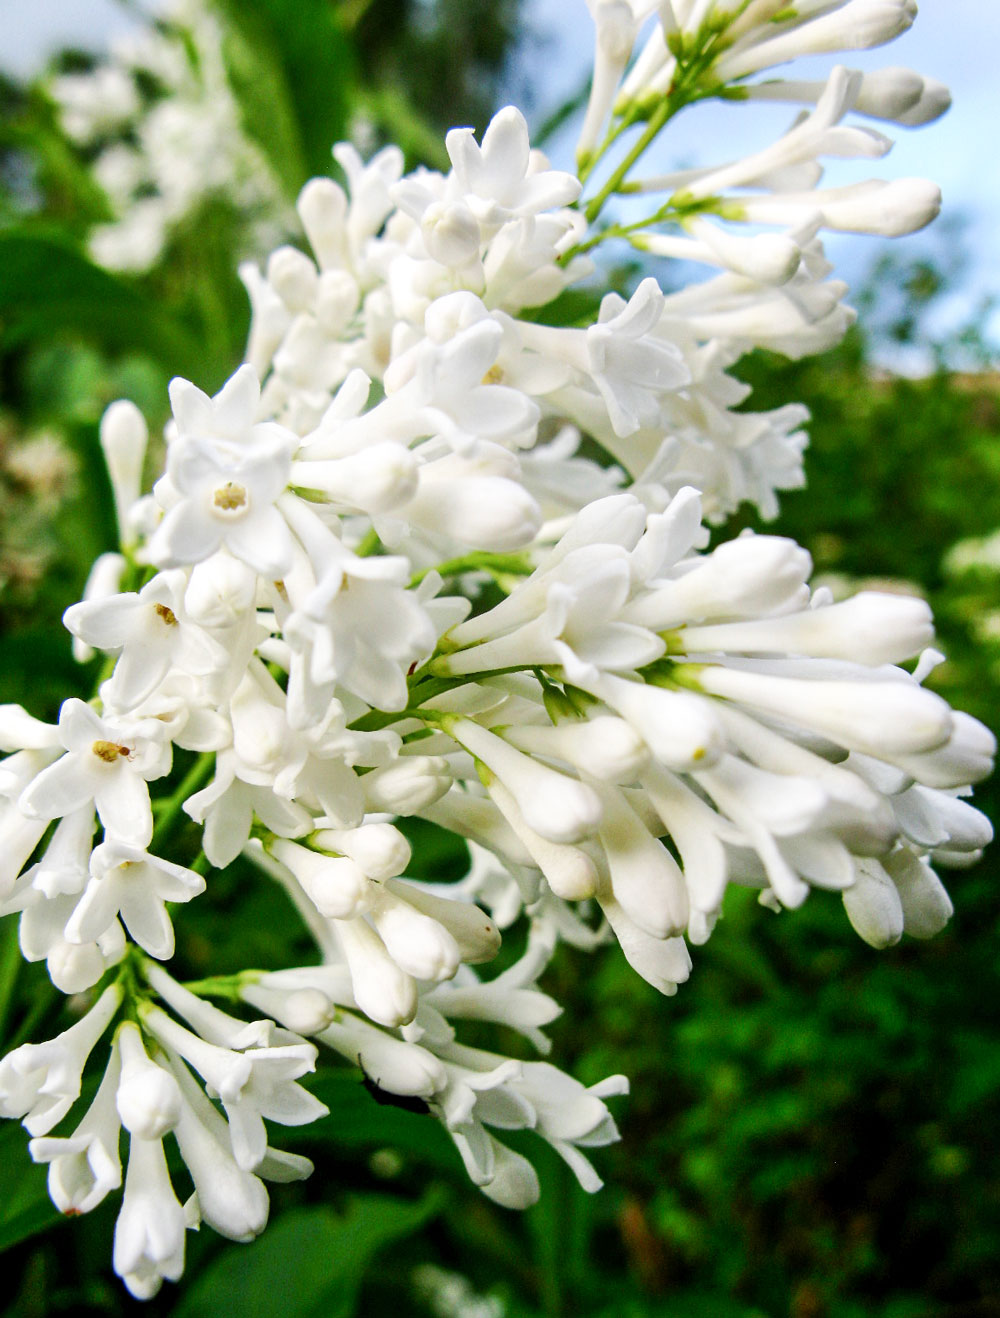 Zuri_Zuberi_flowers_white_2